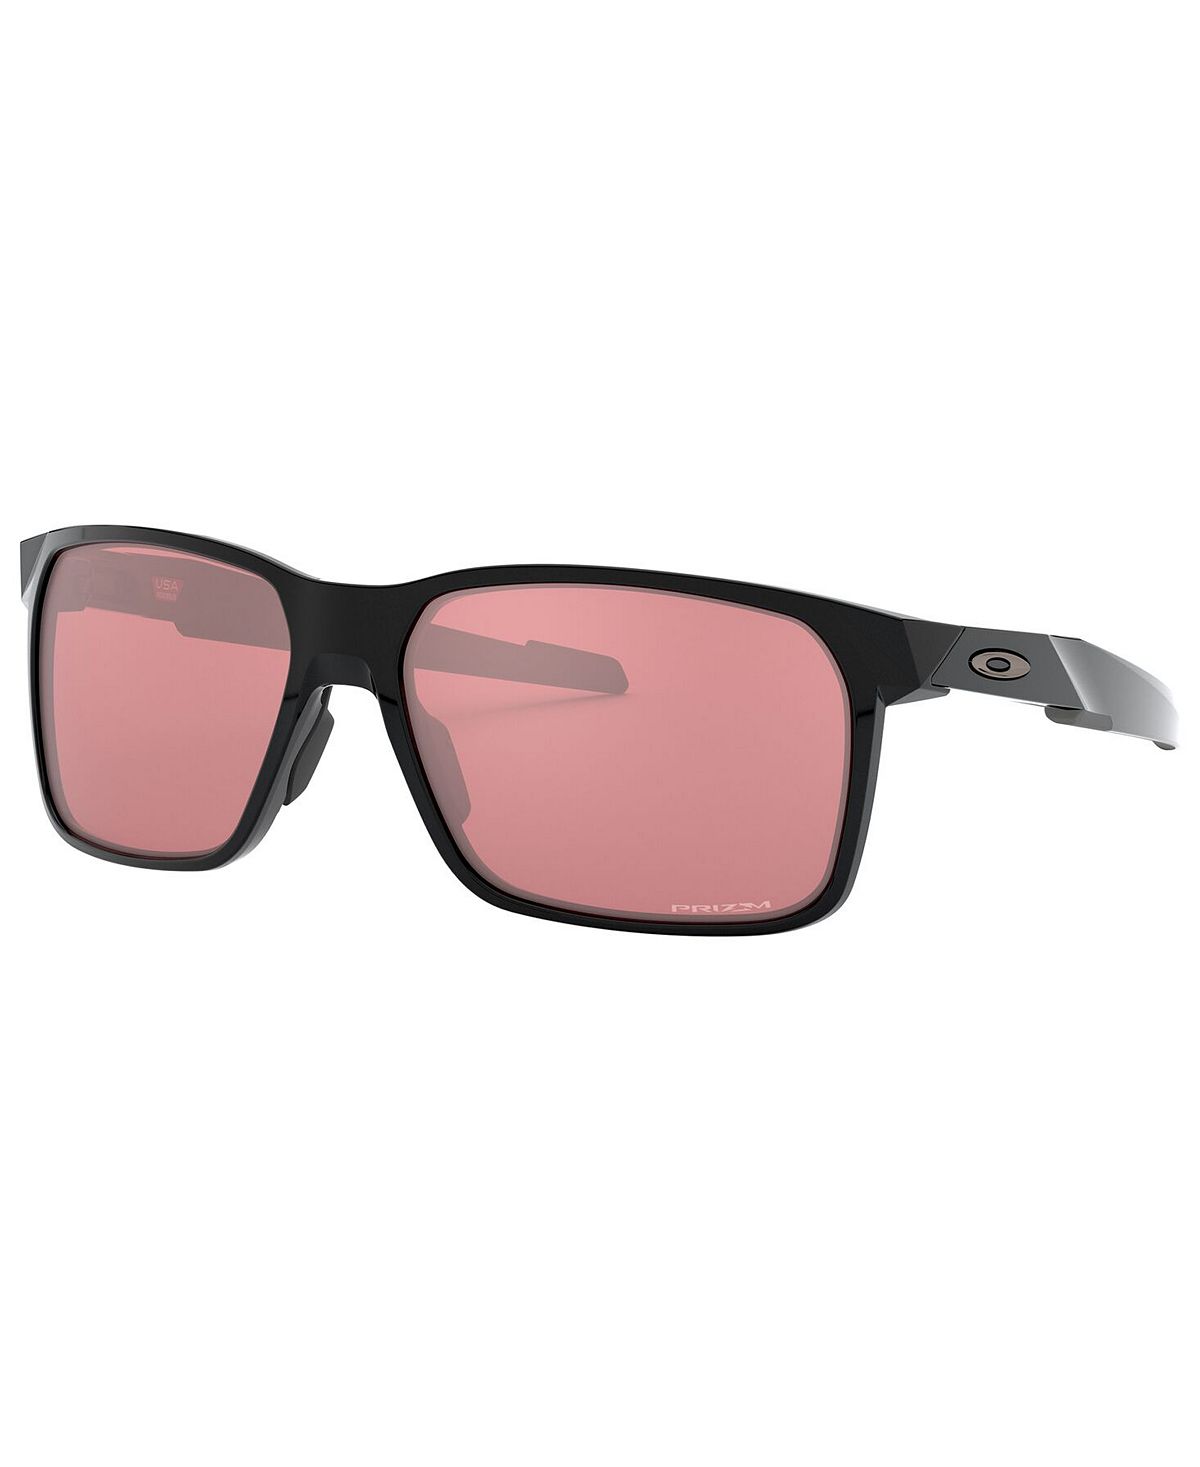 Солнцезащитные очки PORTAL X, OO9460 59 Oakley